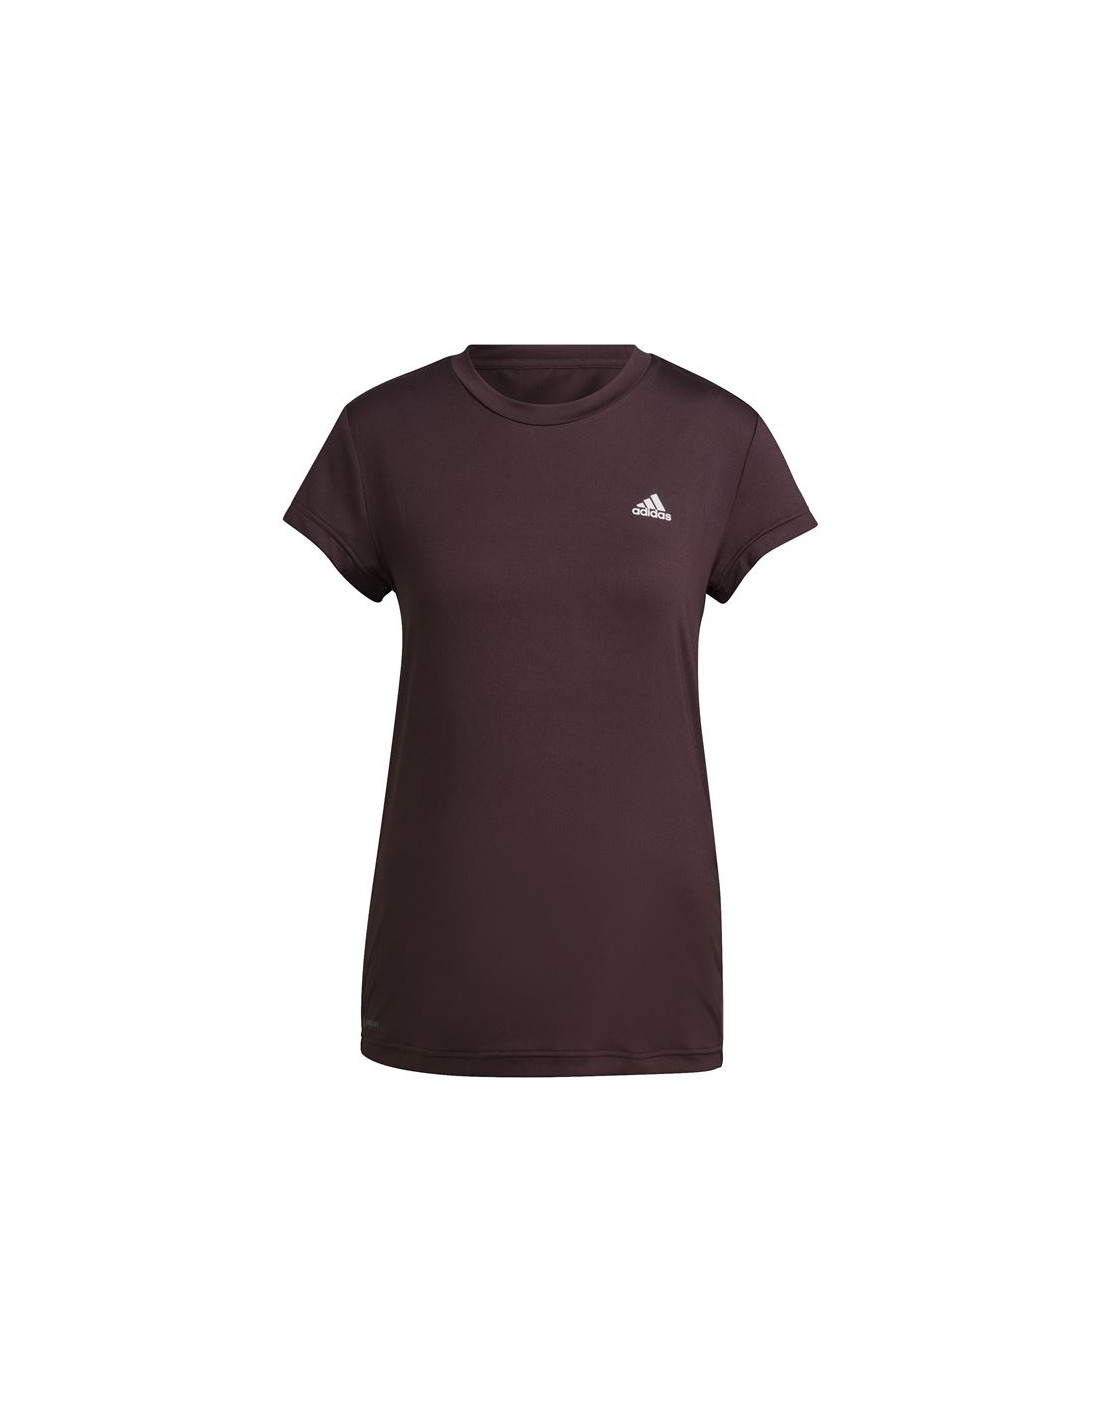 Camiseta adidas designed to move mujer brown